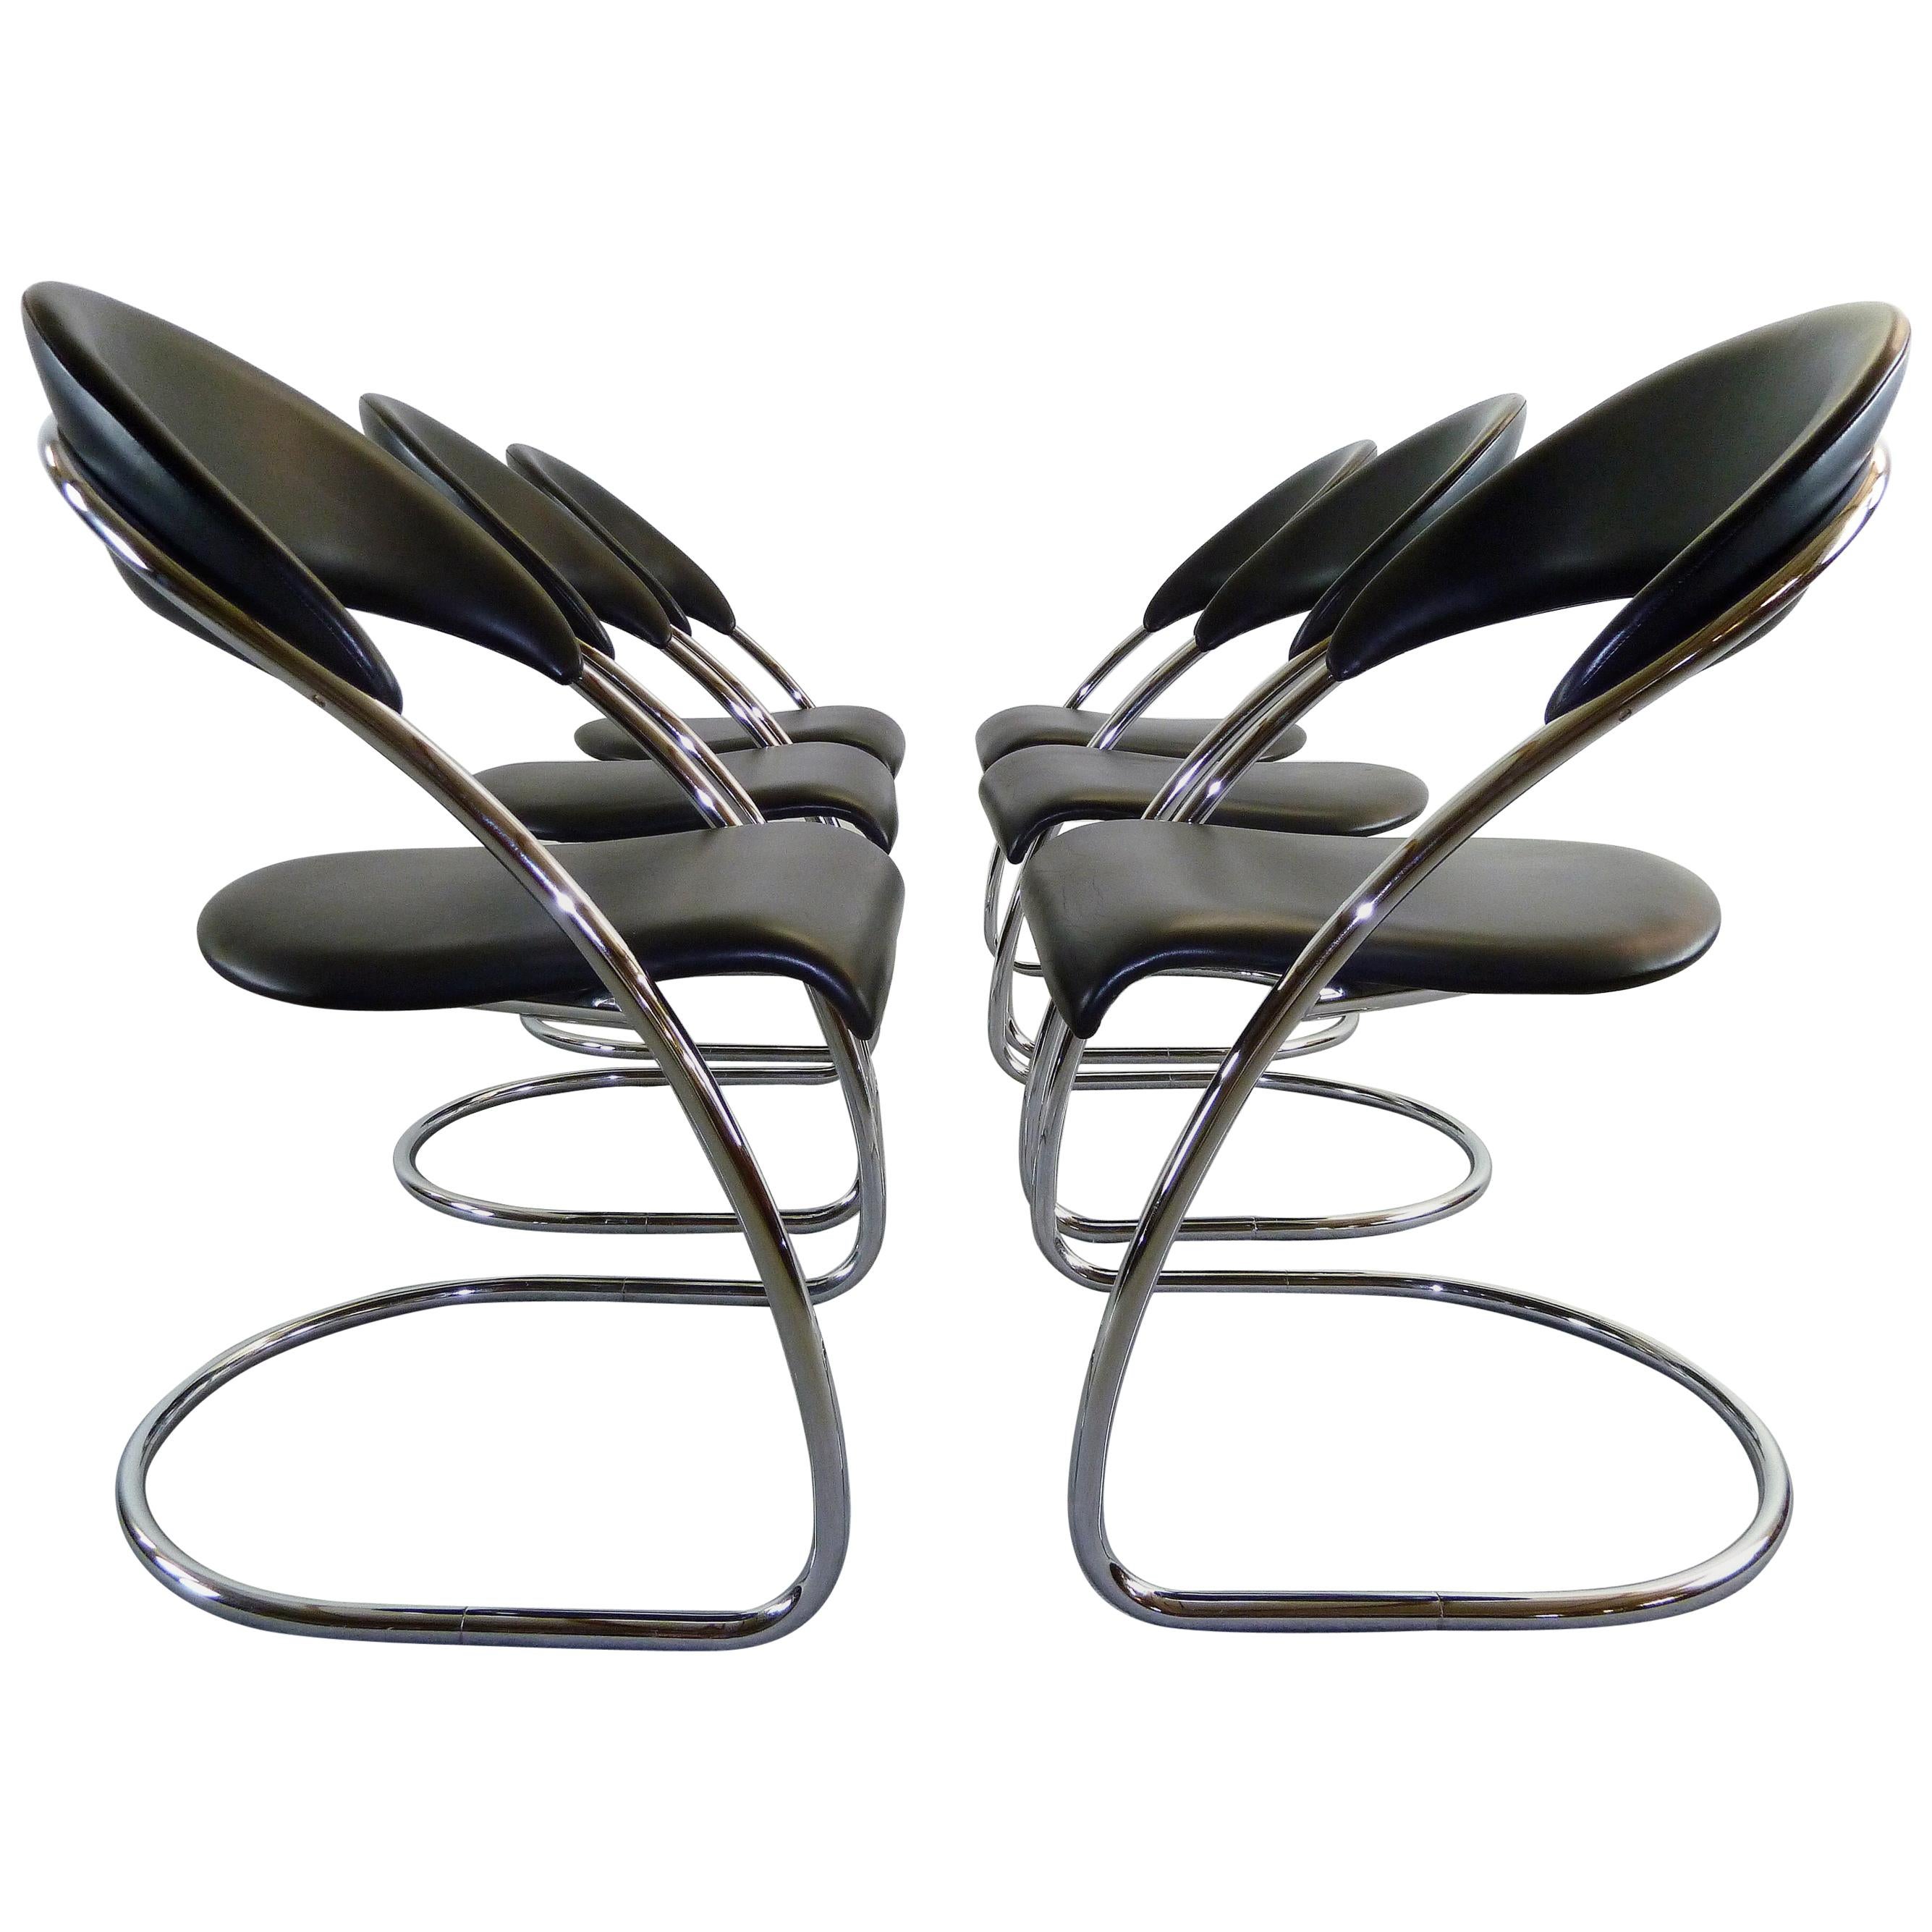 Set of 6 Cantilevered Chairs Thonet Bauhaus Model ST14 Hans Luckhardt